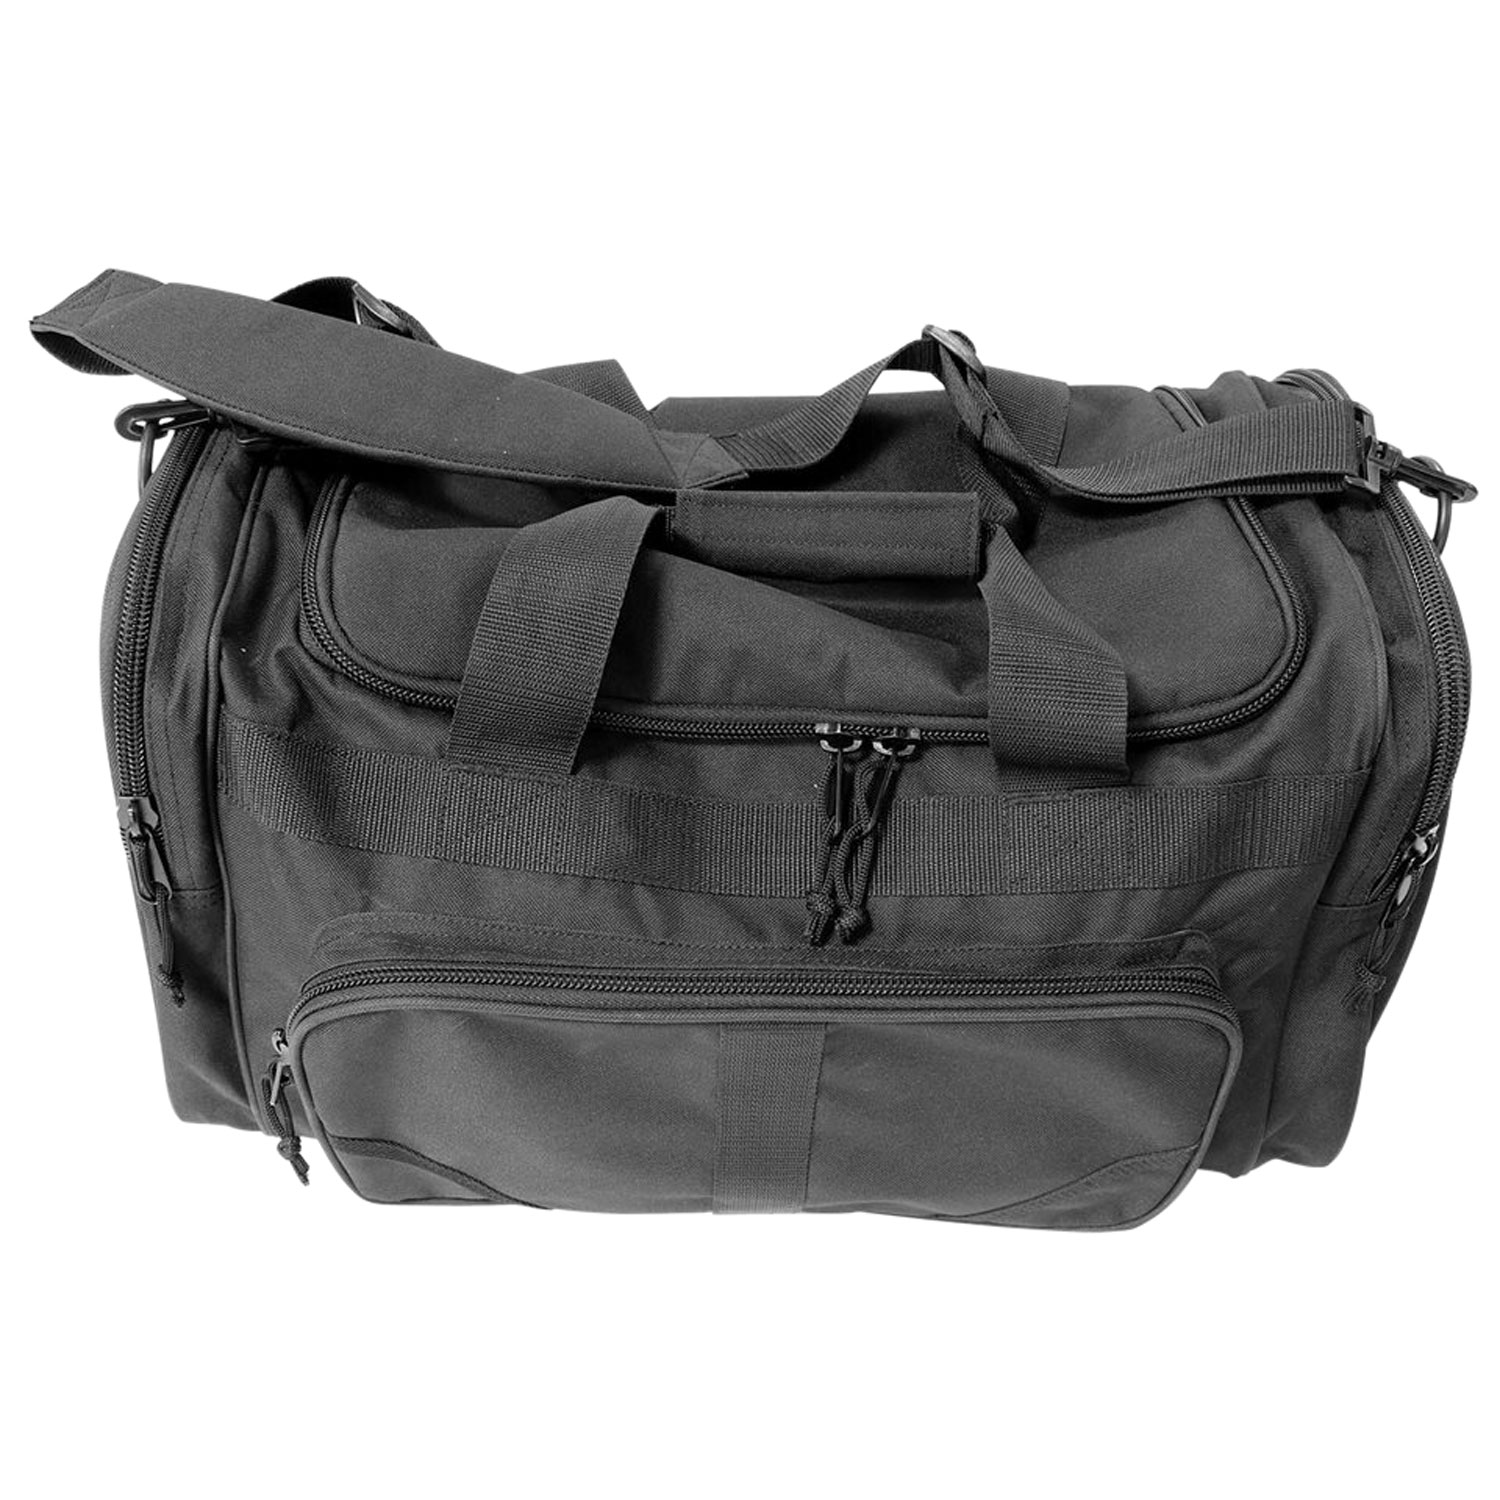 Birchwood Casey 06820 SportLock Range Bag with Three Accessories Pockets, Adjustable Shoulder Strap & Black Finish 10